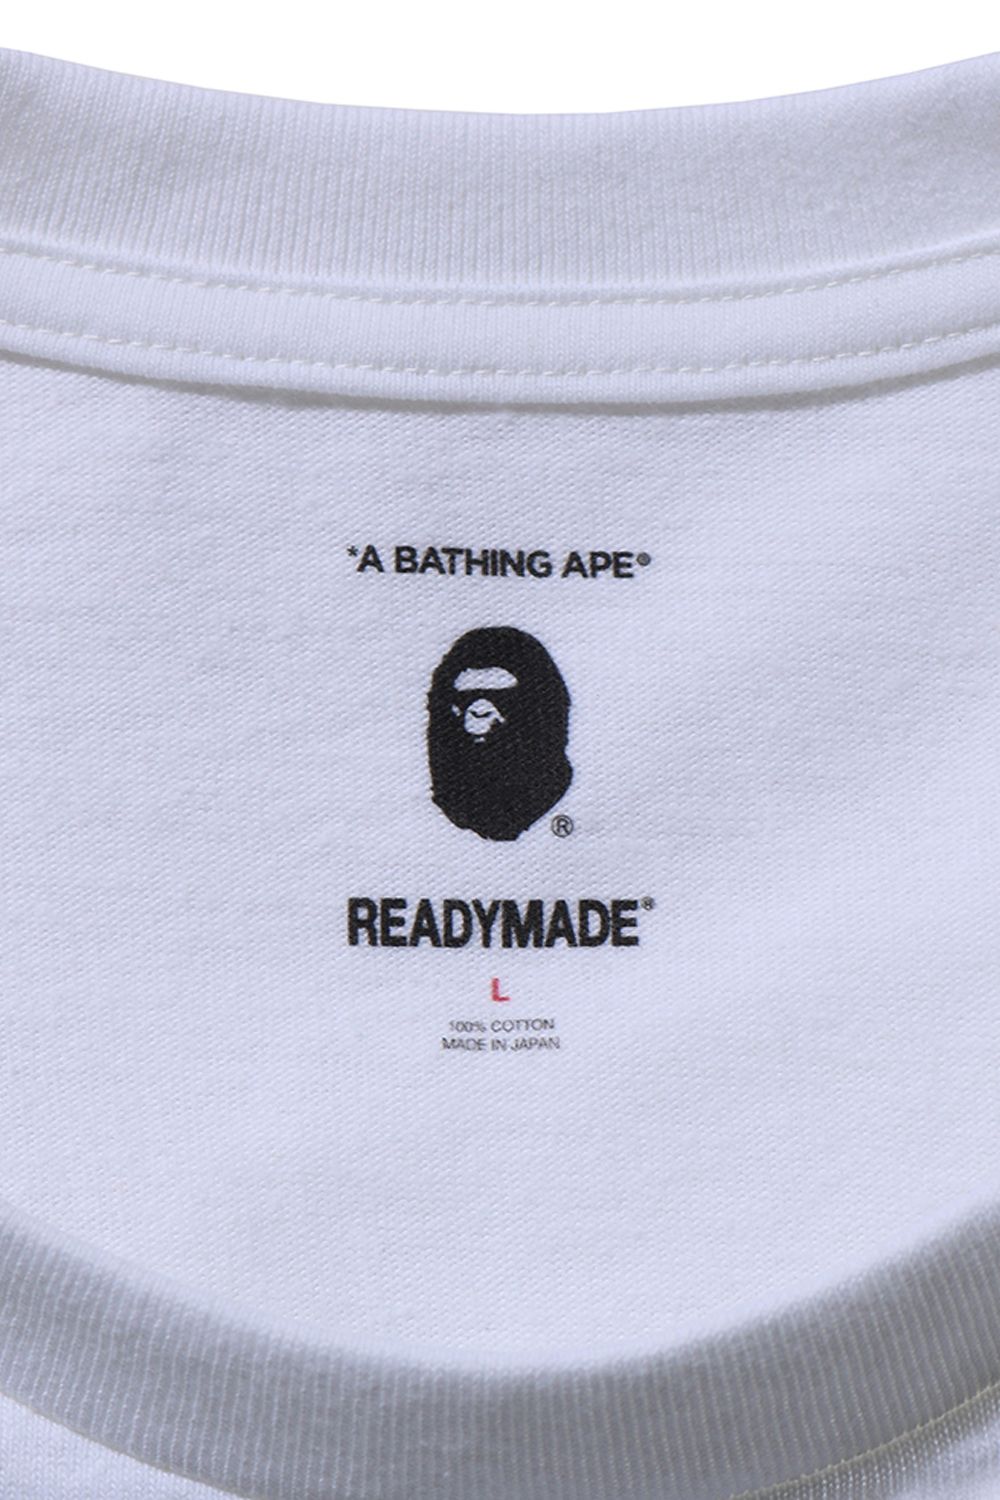 READYMADE - READYMADE × A BATHING APE ® 3 PACK TEE / レディメイド